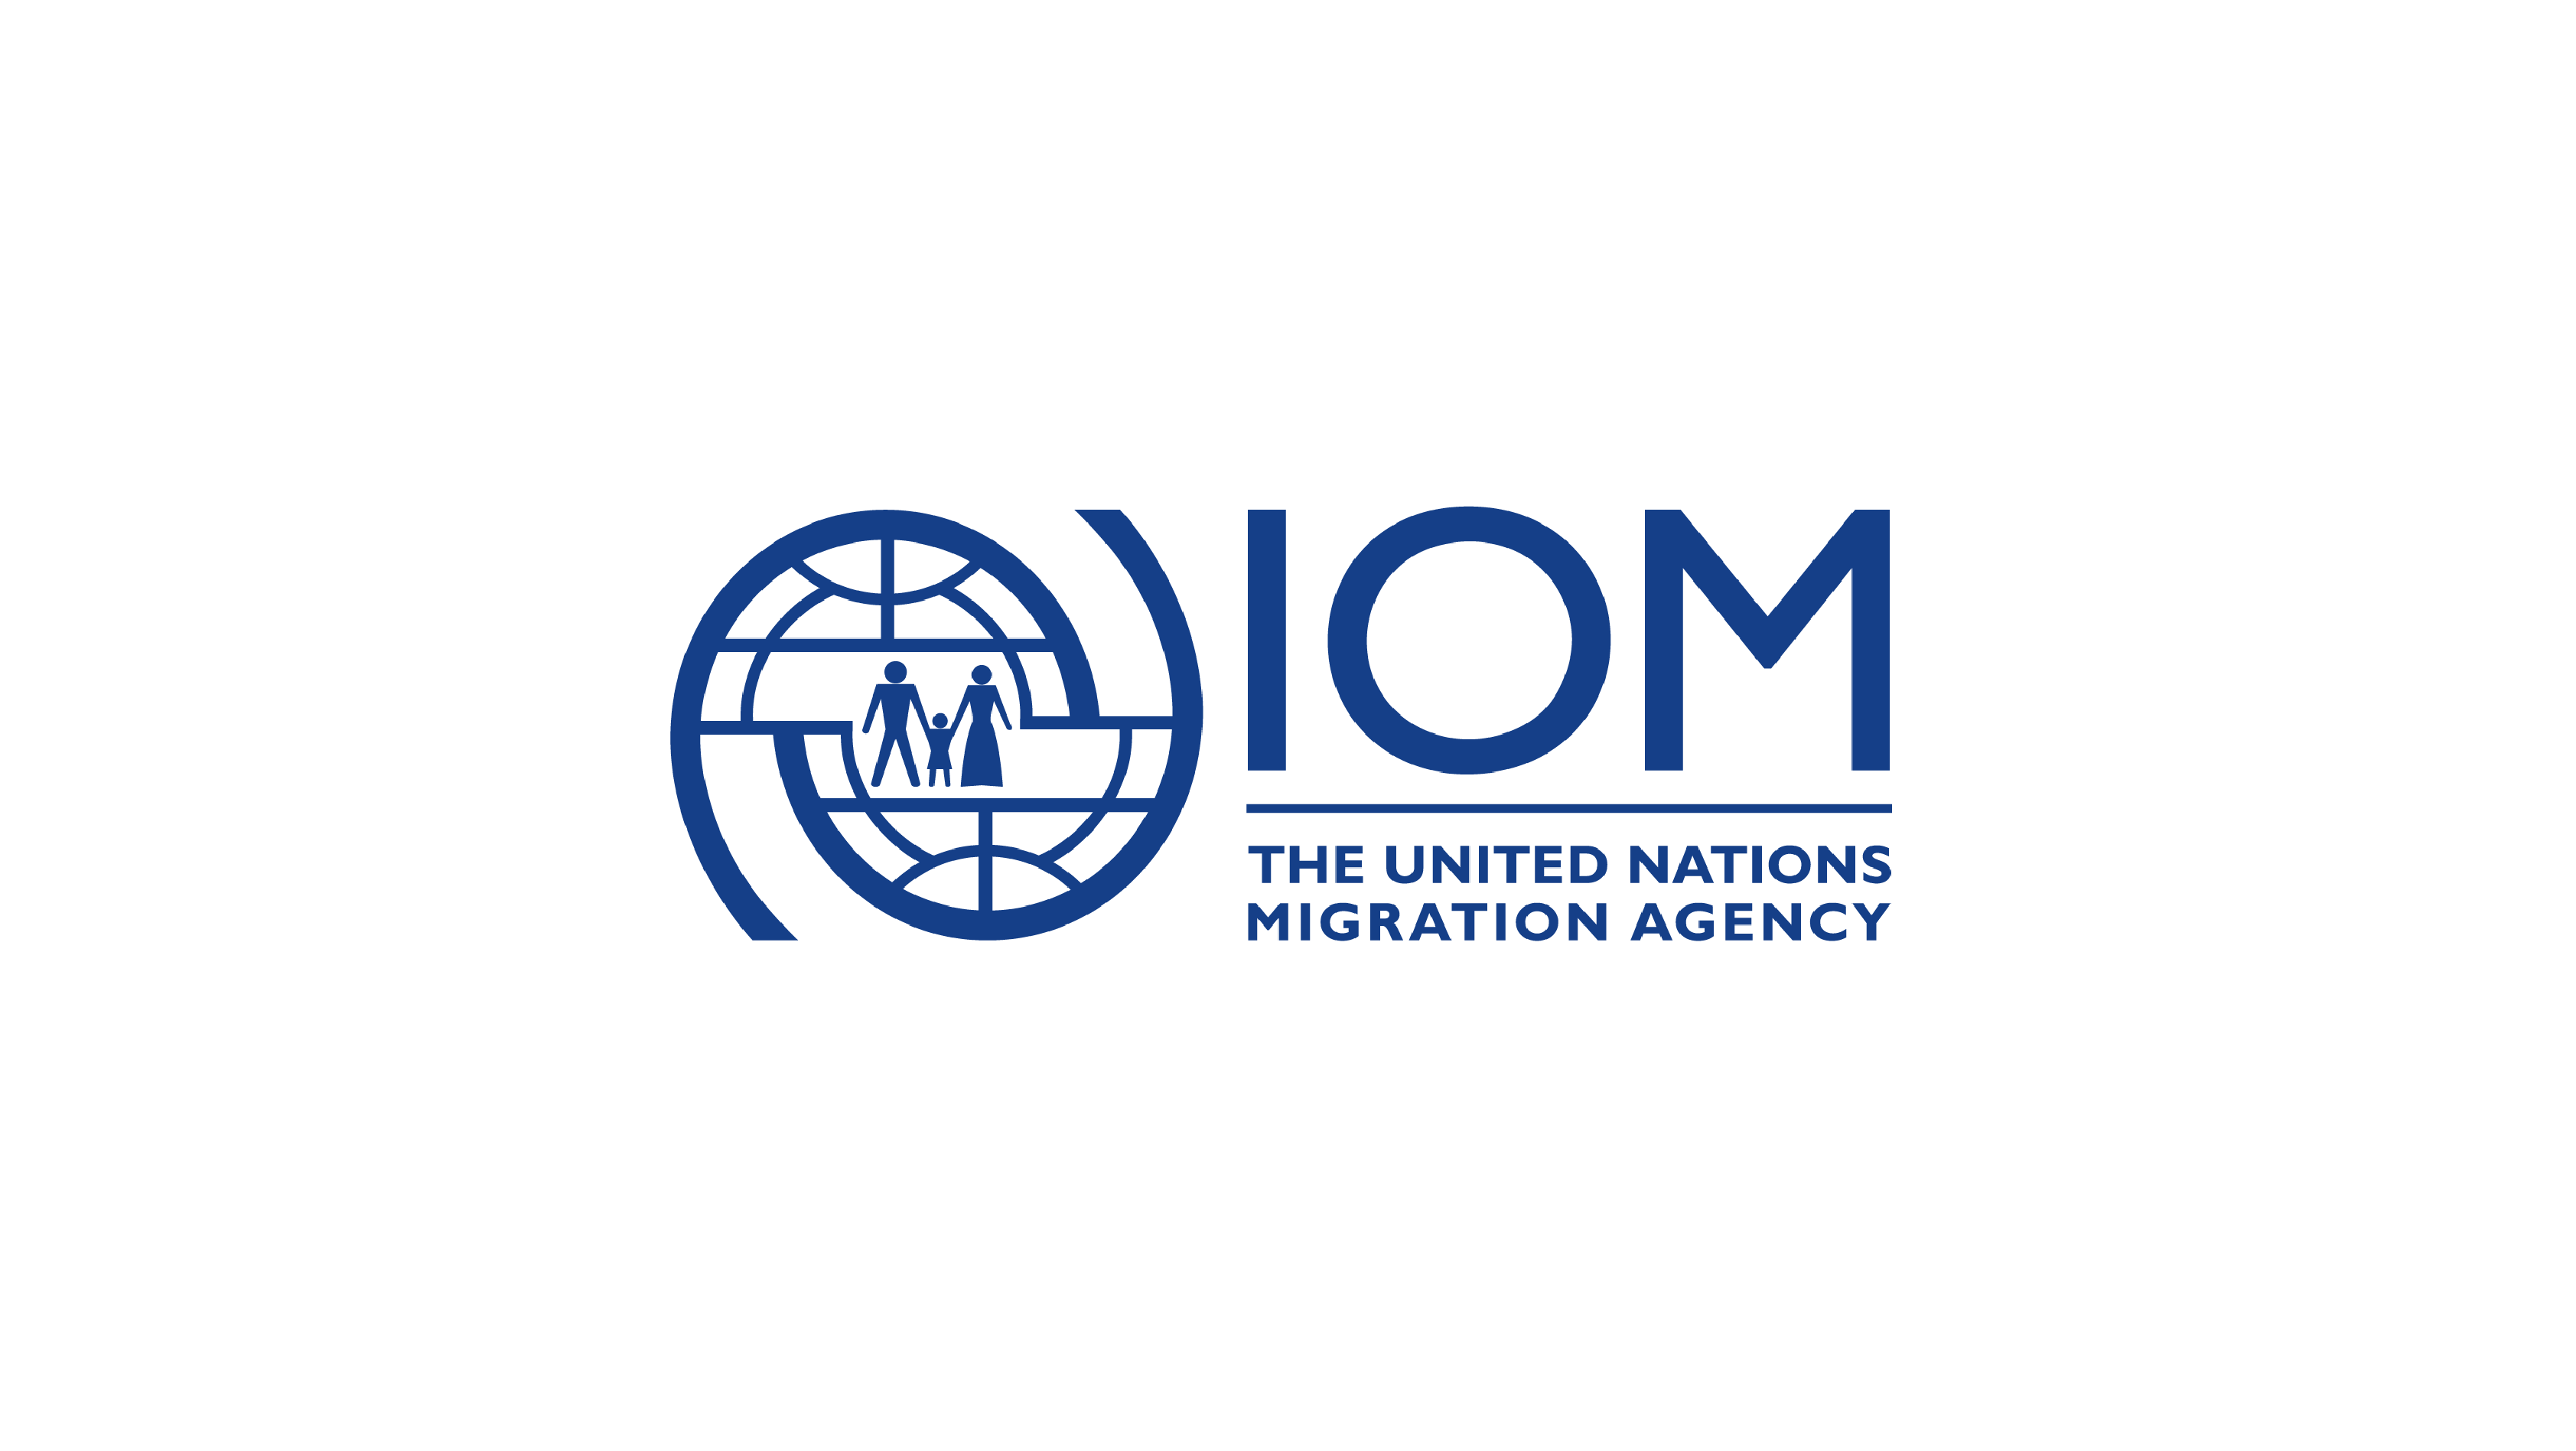 Оон миграция. Международная организация по миграции IOM. Международная организация по миграции лого. Международная организация по миграции мом эмблема. Международная организация по миграции и Россия.